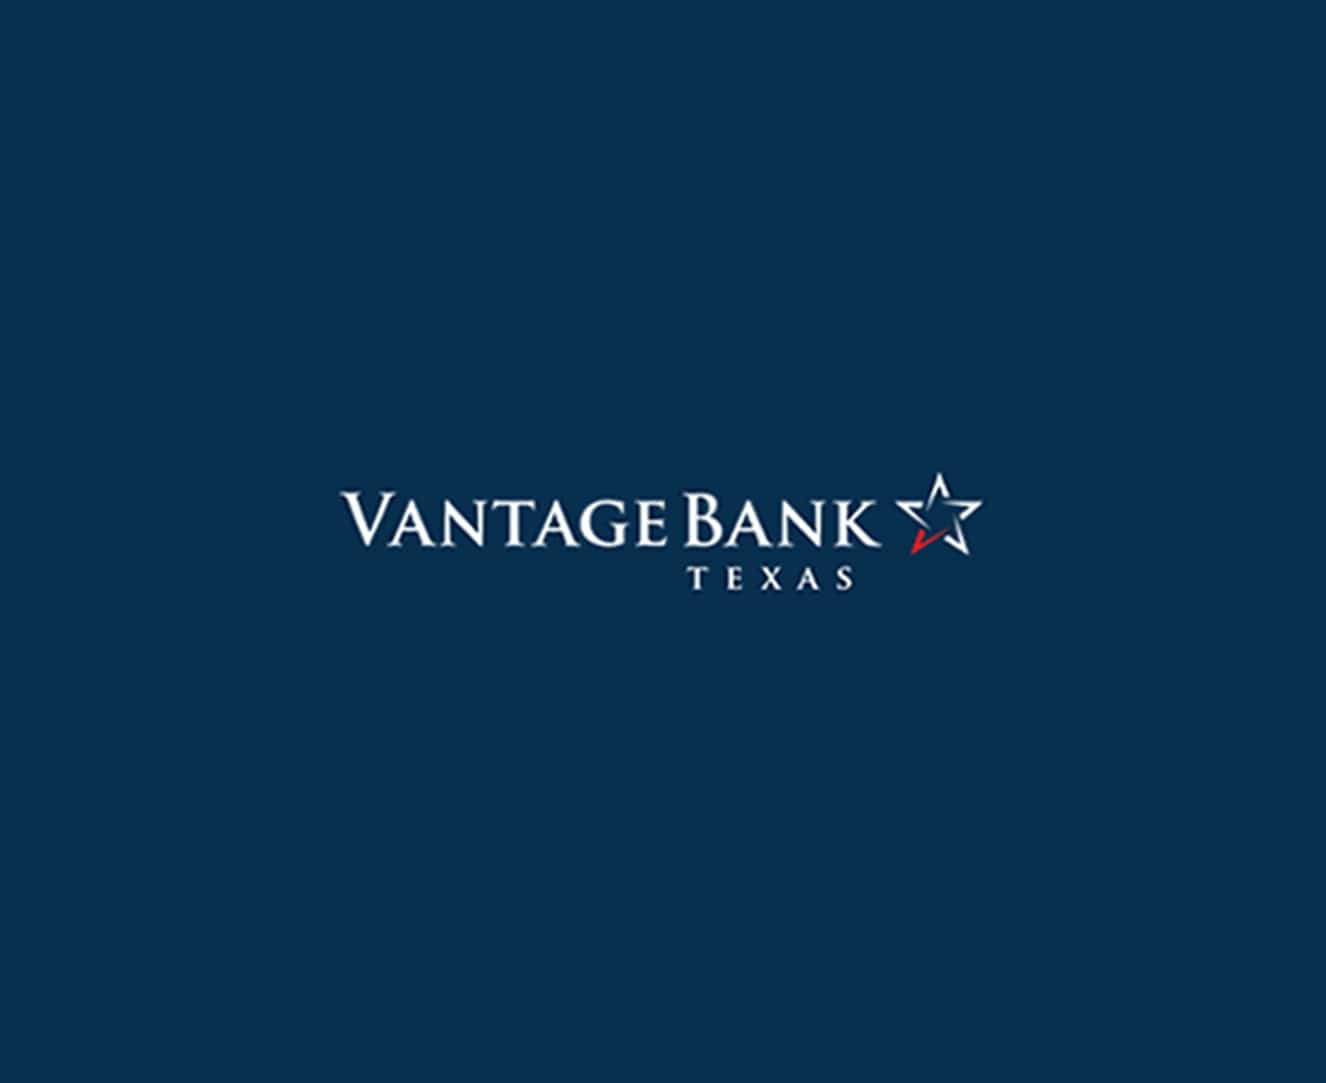 Vantage Bank Texas project